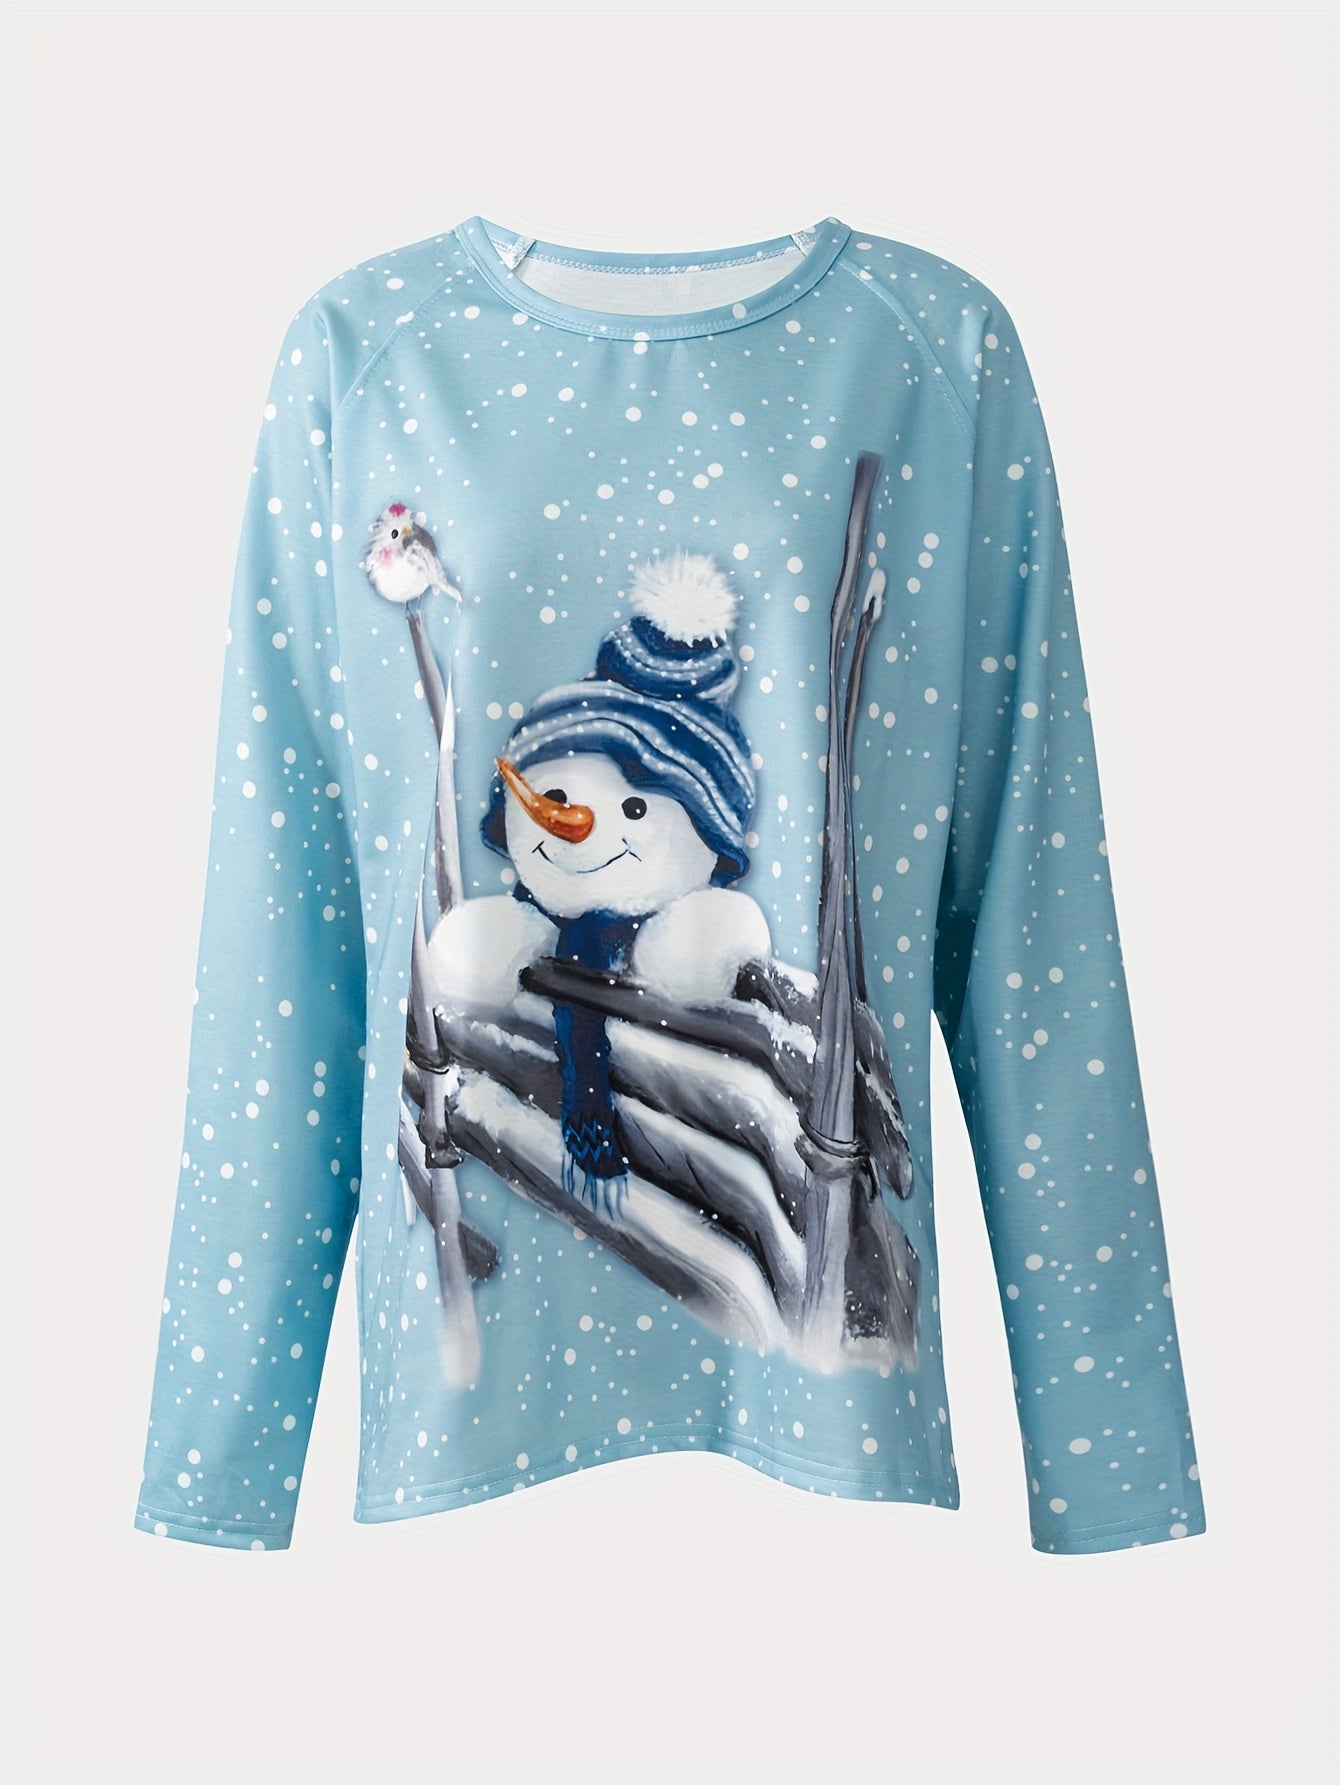 Snowman Print Pullover Sweatshirt, Casual Long Sleeve Crew Neck Sweatshirt, Women's Clothing Ada Fashion